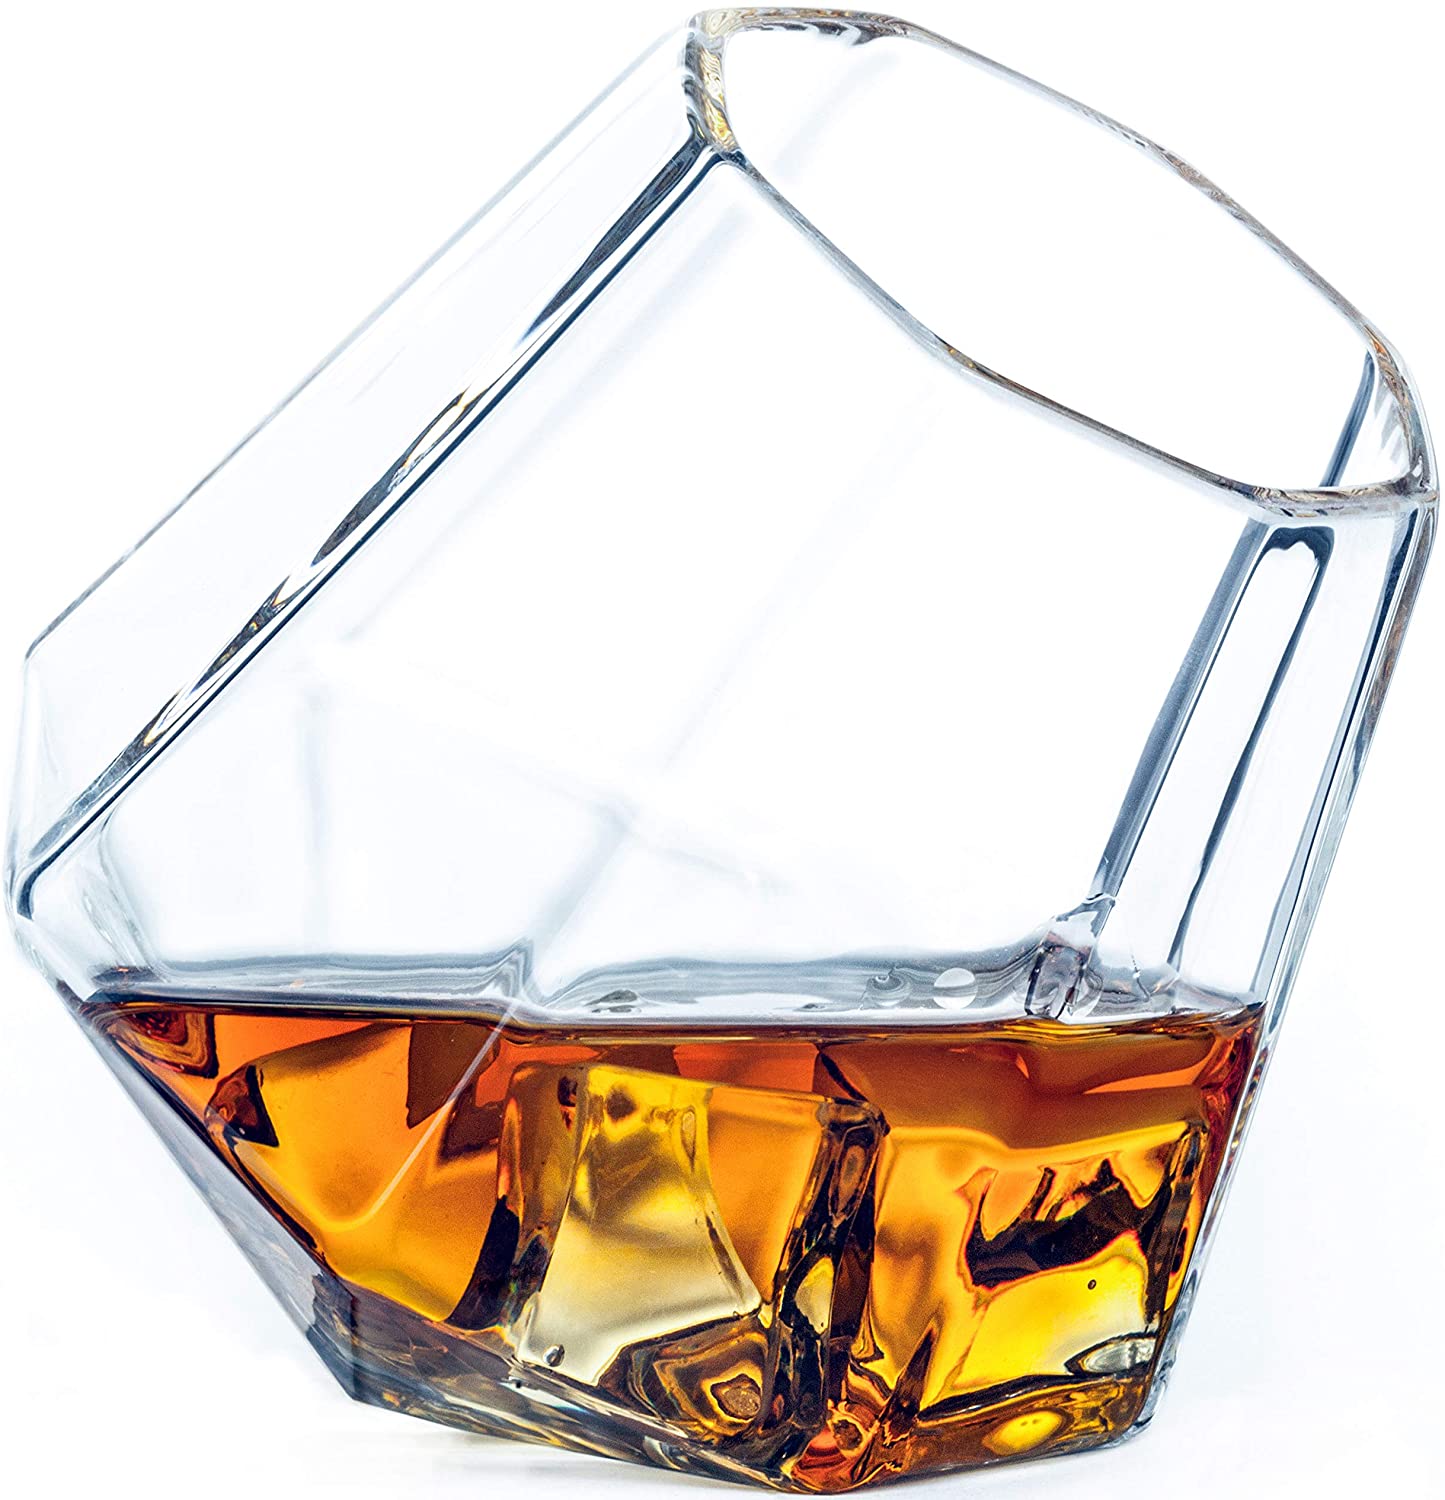 Catzon Diamond Whiskey Glasses 10-Ounce Set of 2